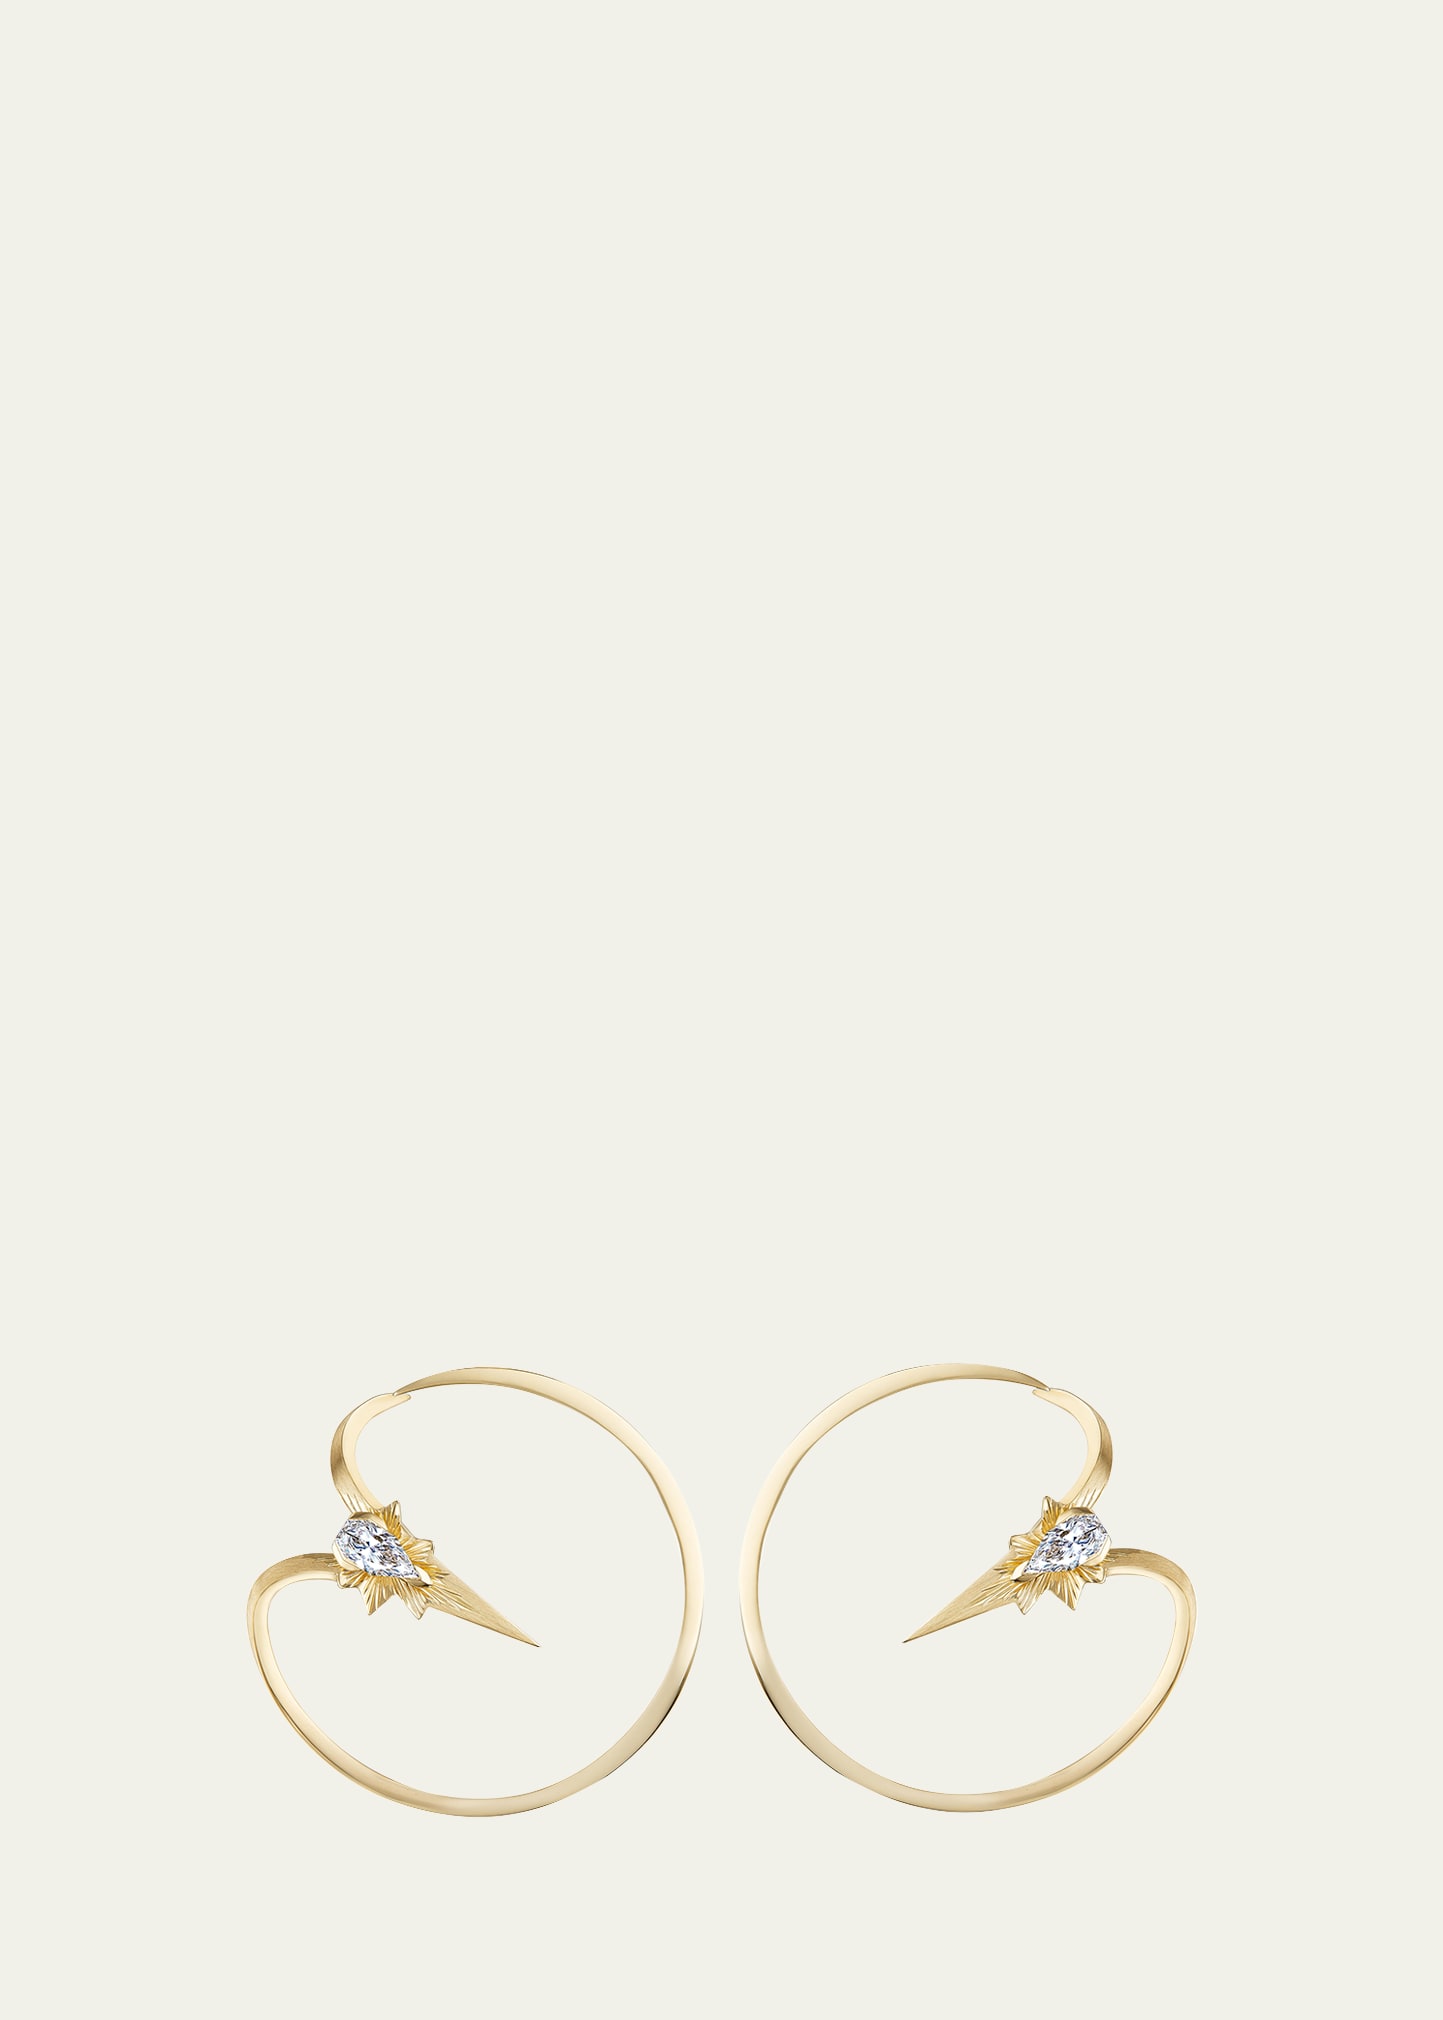 Stephen Webster 18k Yellow Gold Collision Hoop Earrings With Meteoric Diamonds